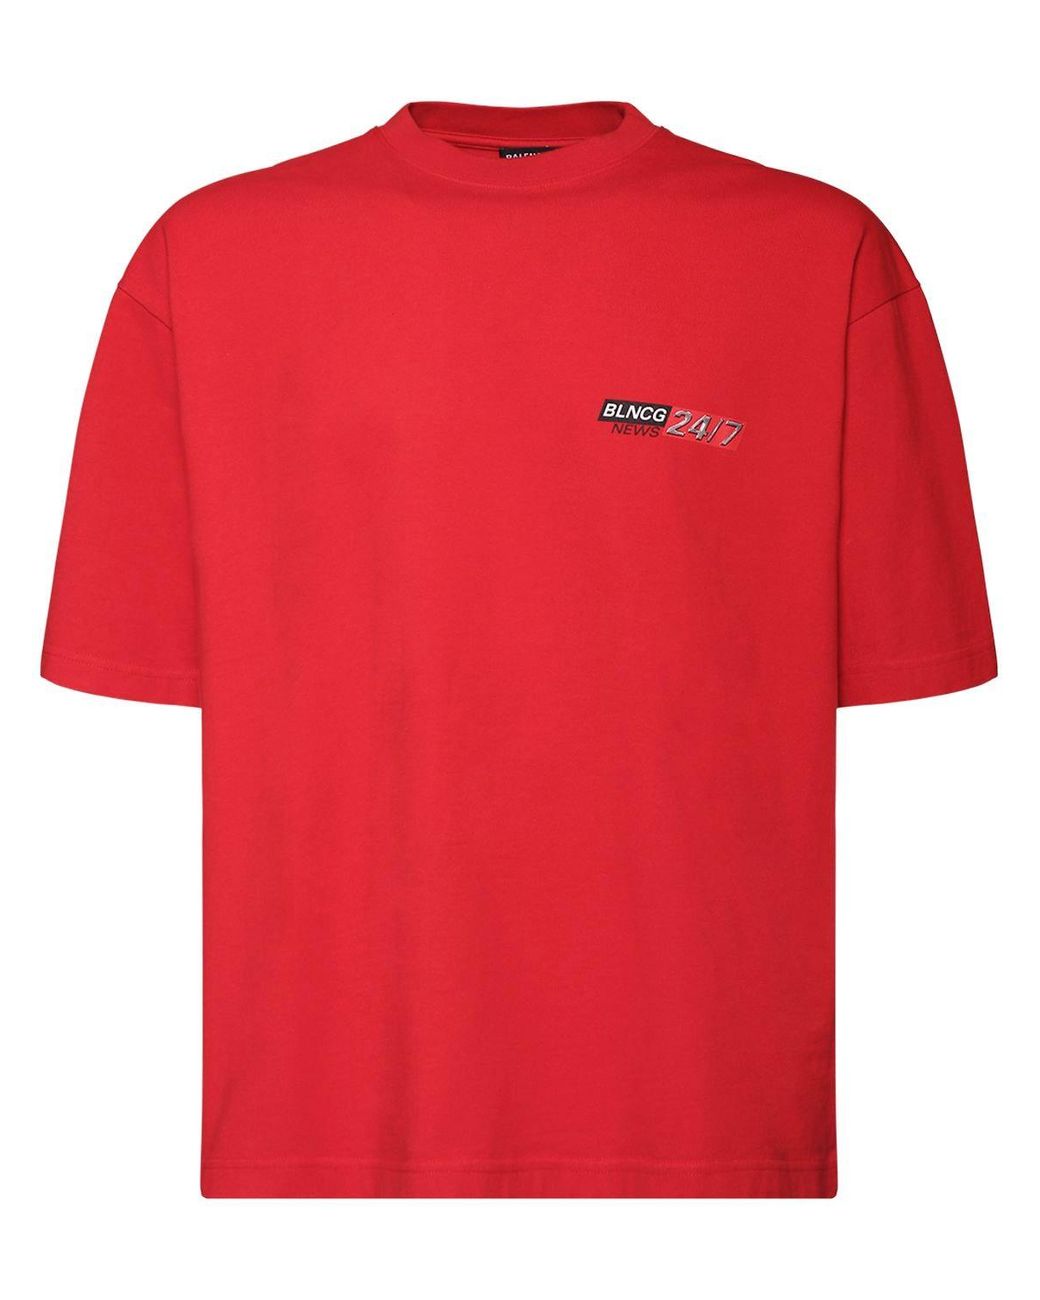 Balenciaga Logo News Print Cotton Jersey T-shirt in Red for Men - Lyst